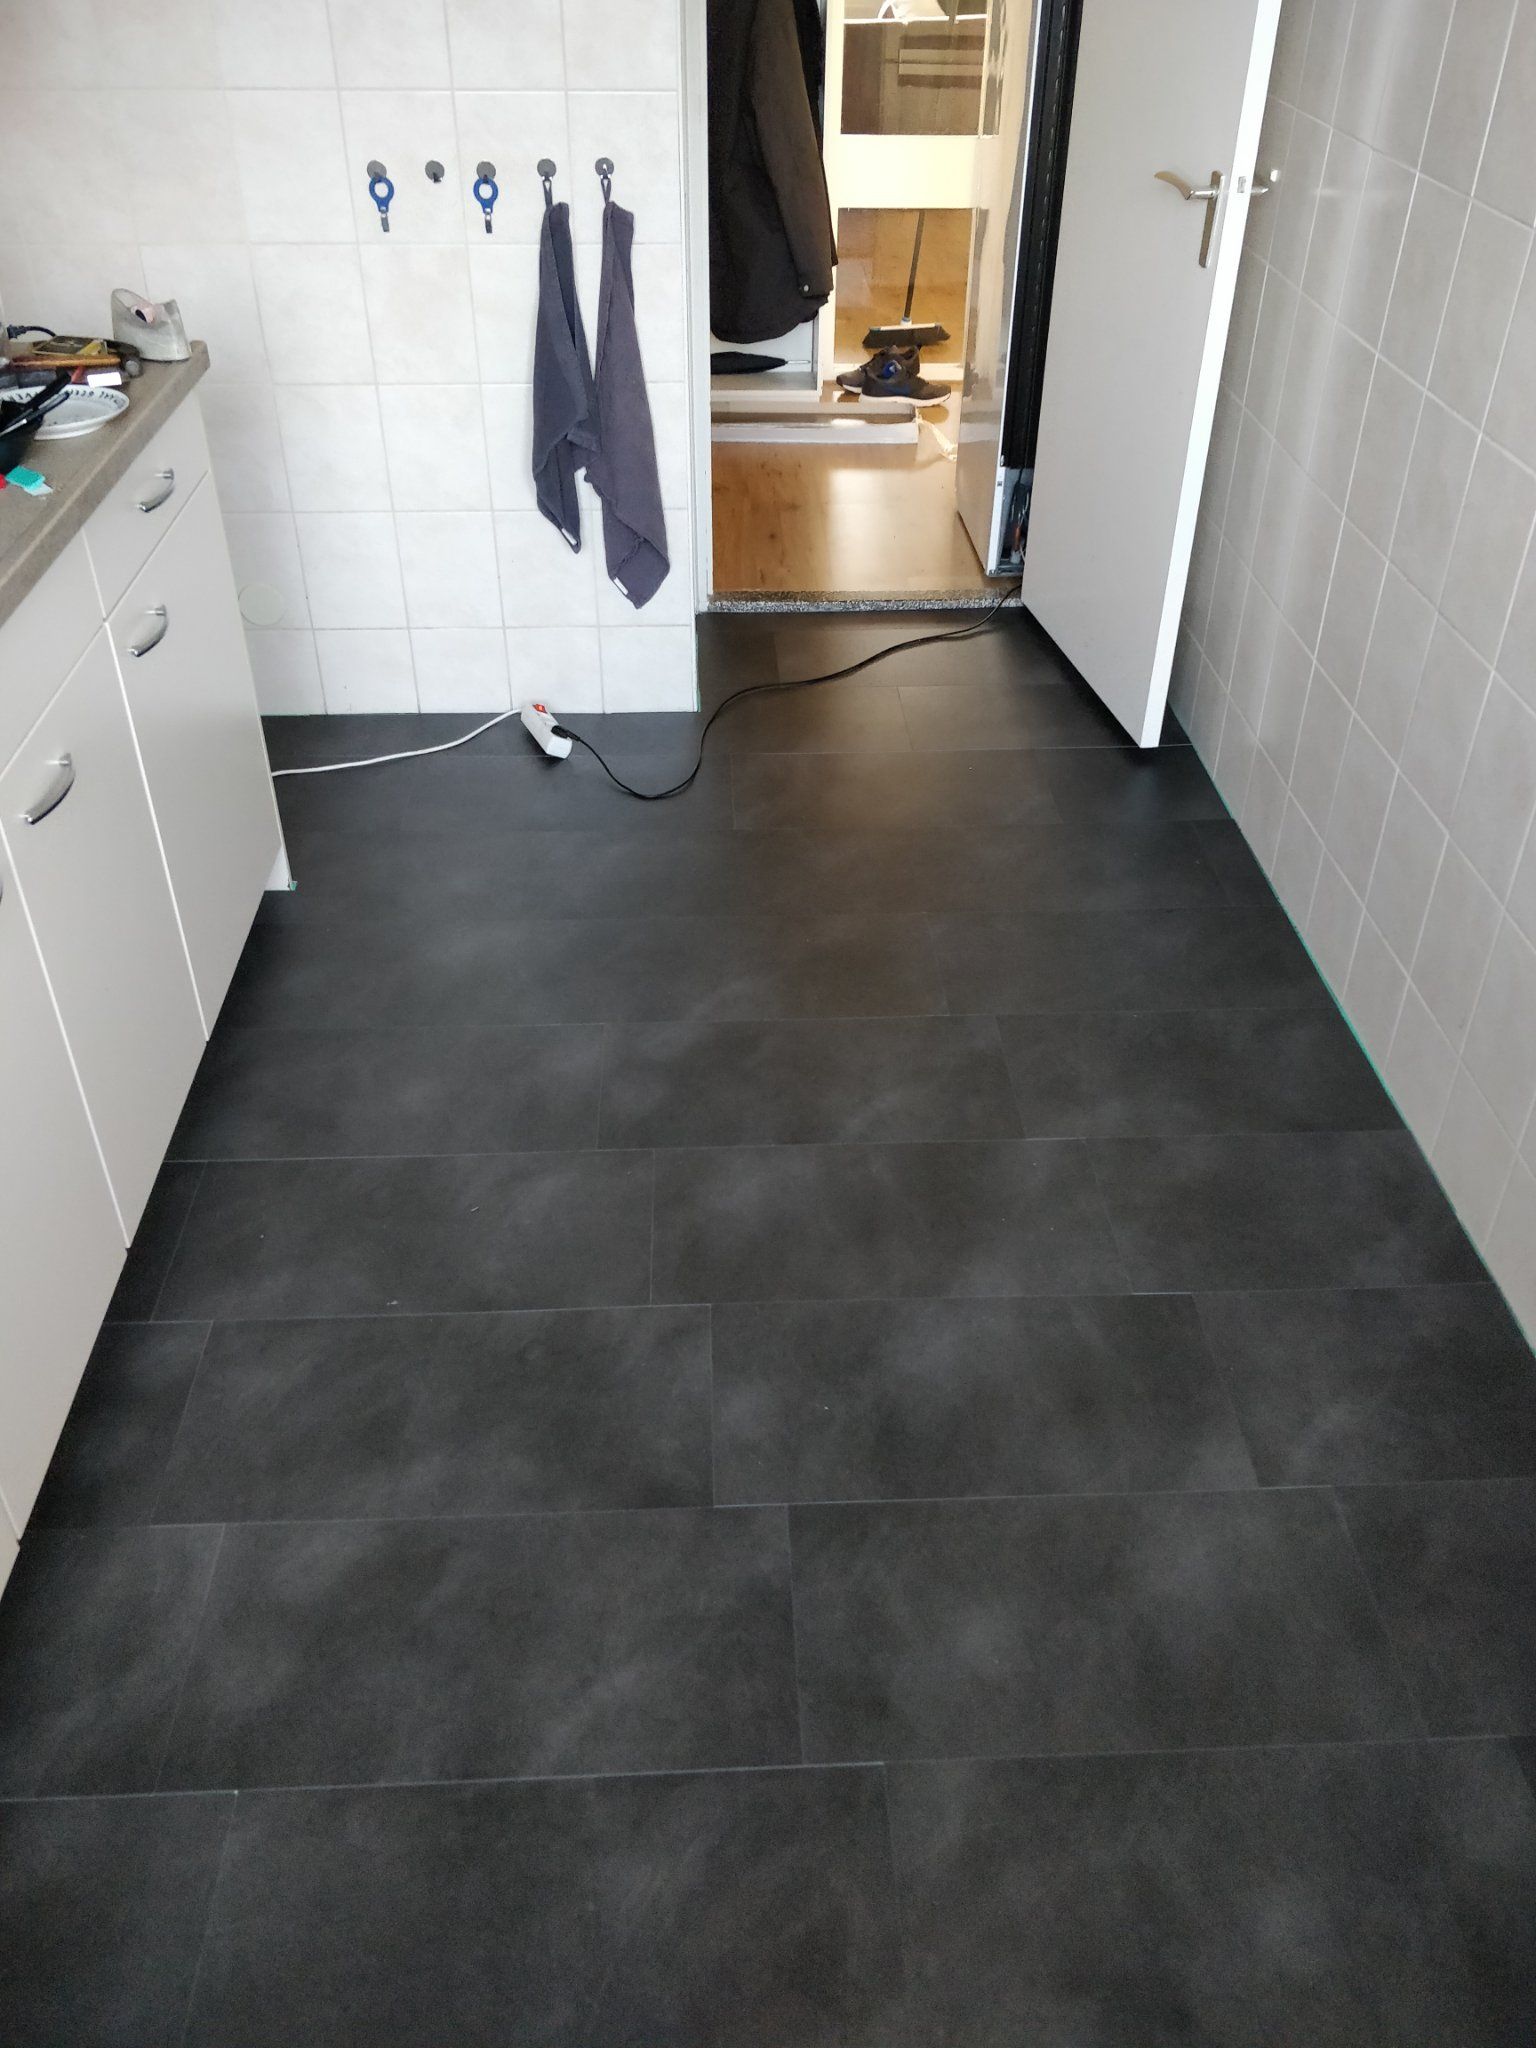 bestellen Wantrouwen grens PVC Vloer in de keuken opnieuw leggen - Werkspot